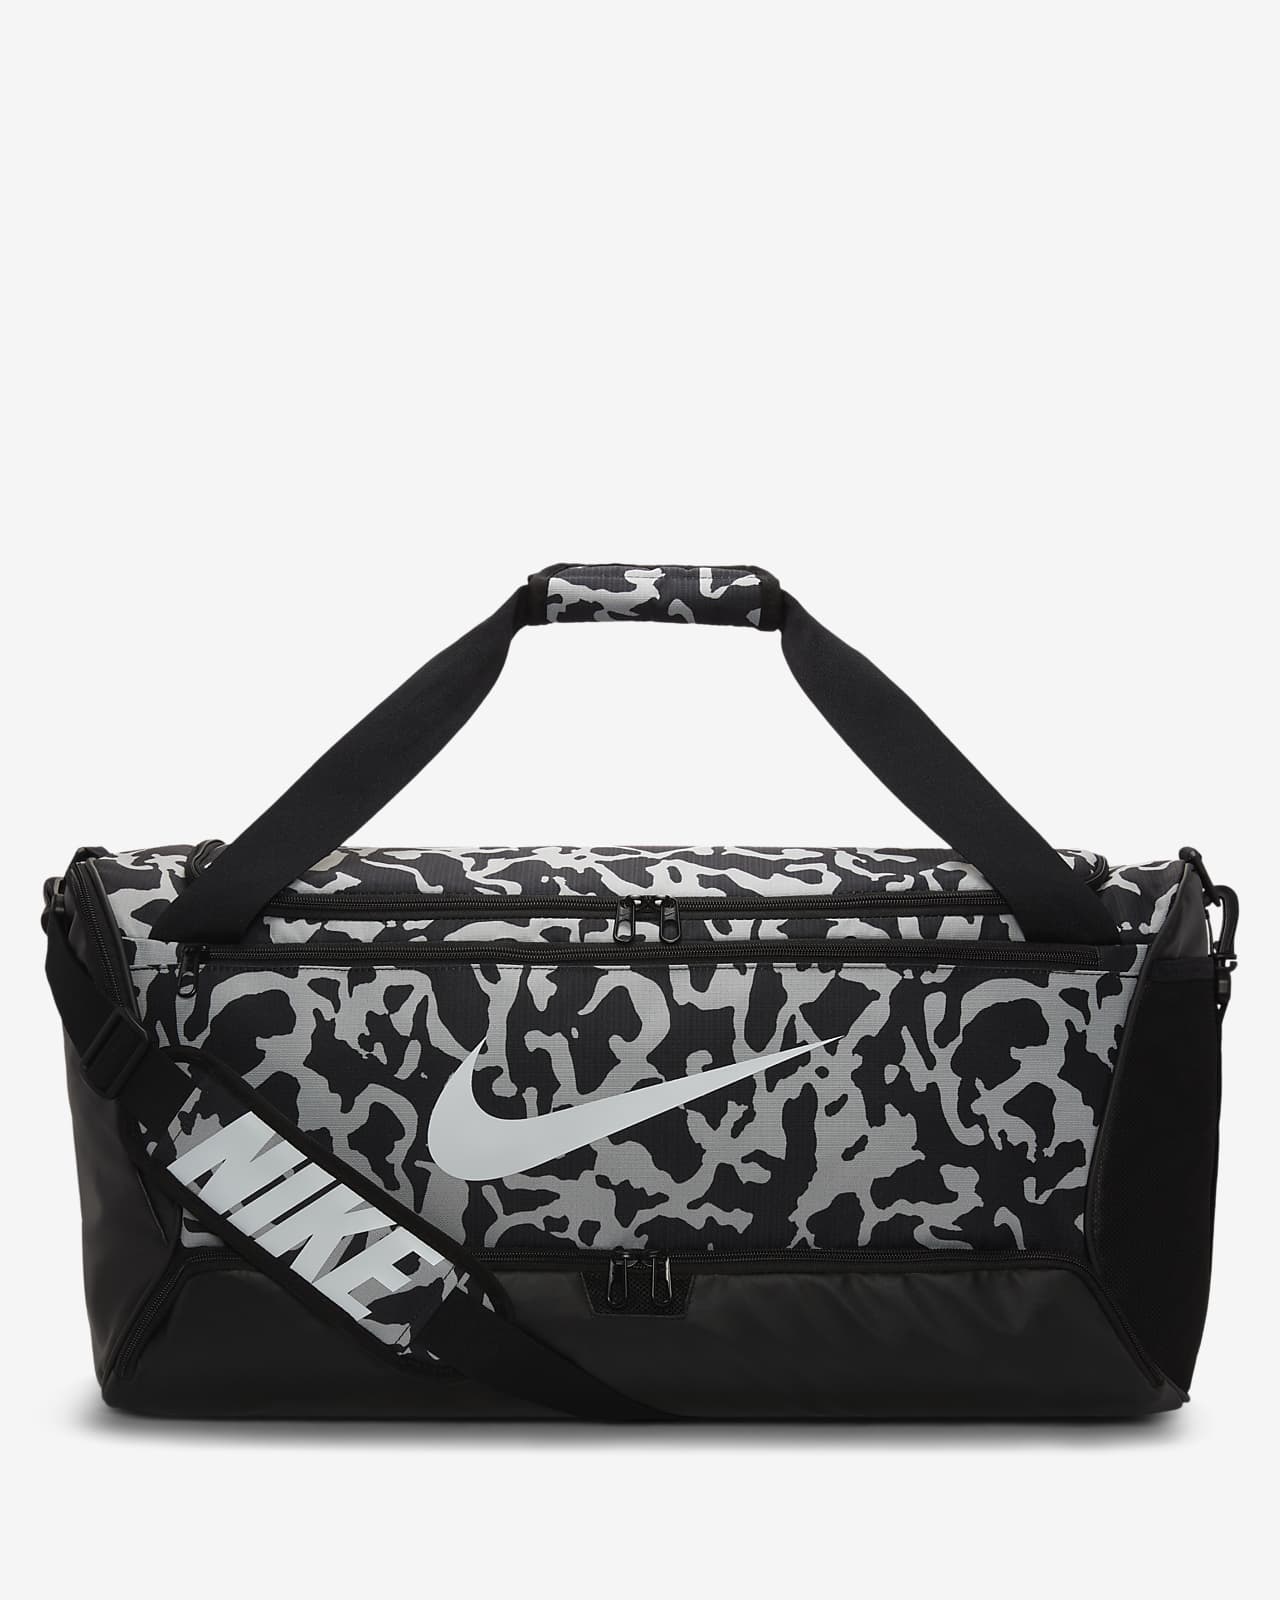 Nike Brasilia Duffel Bag (Medium, 60L)